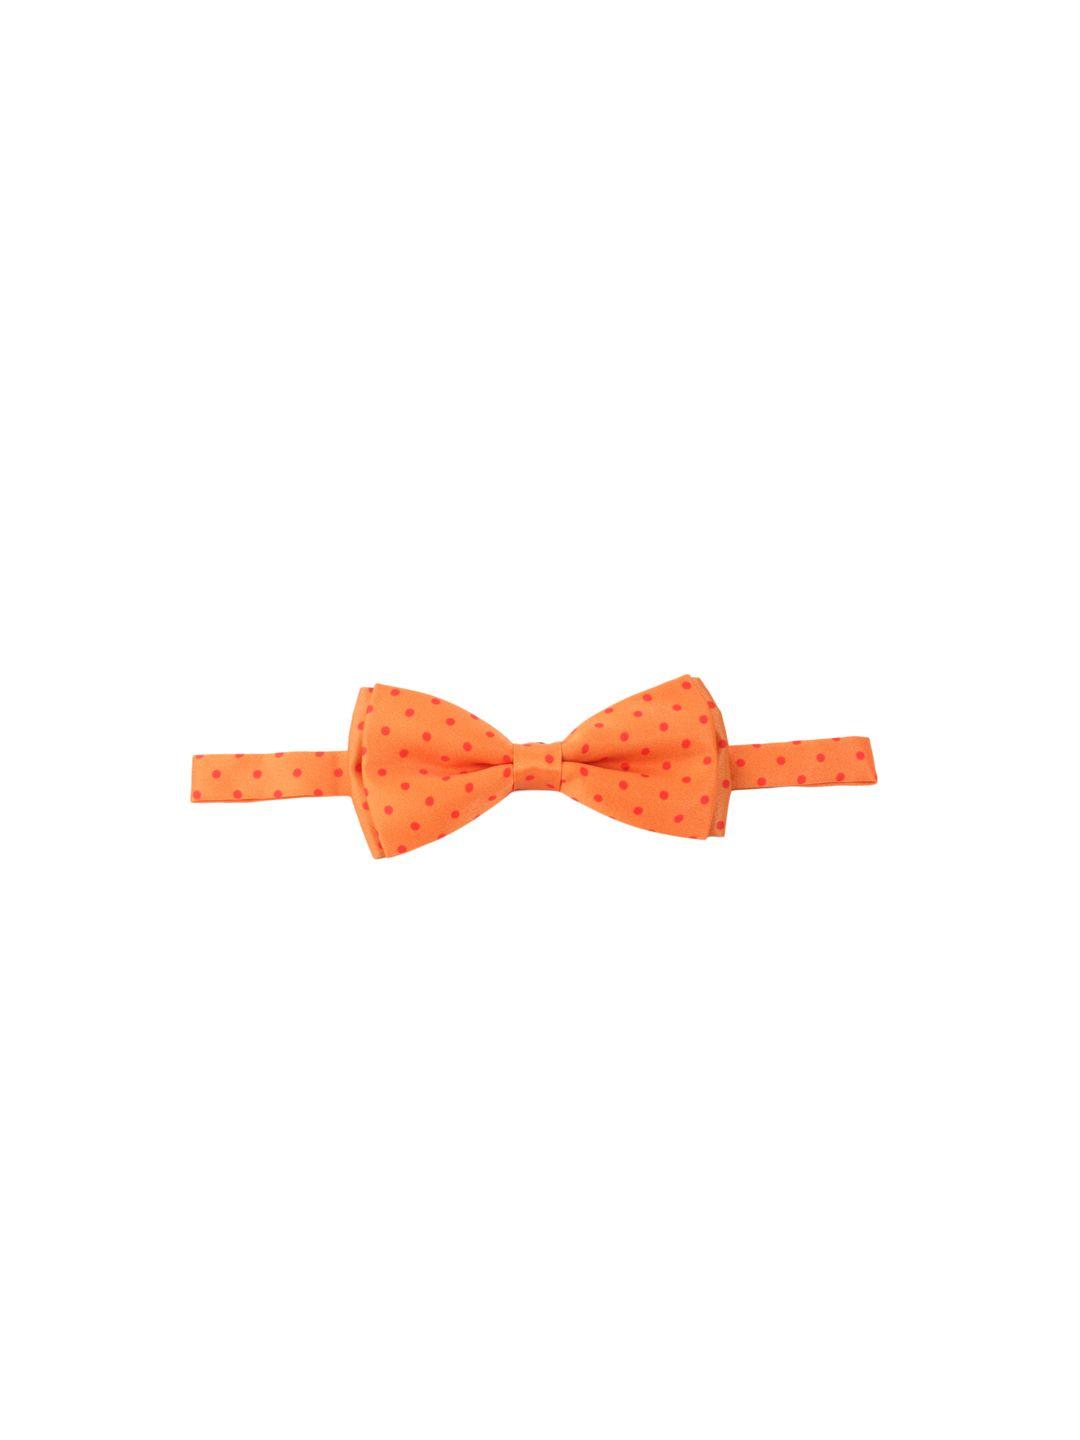 alvaro castagnino orange printed bow tie